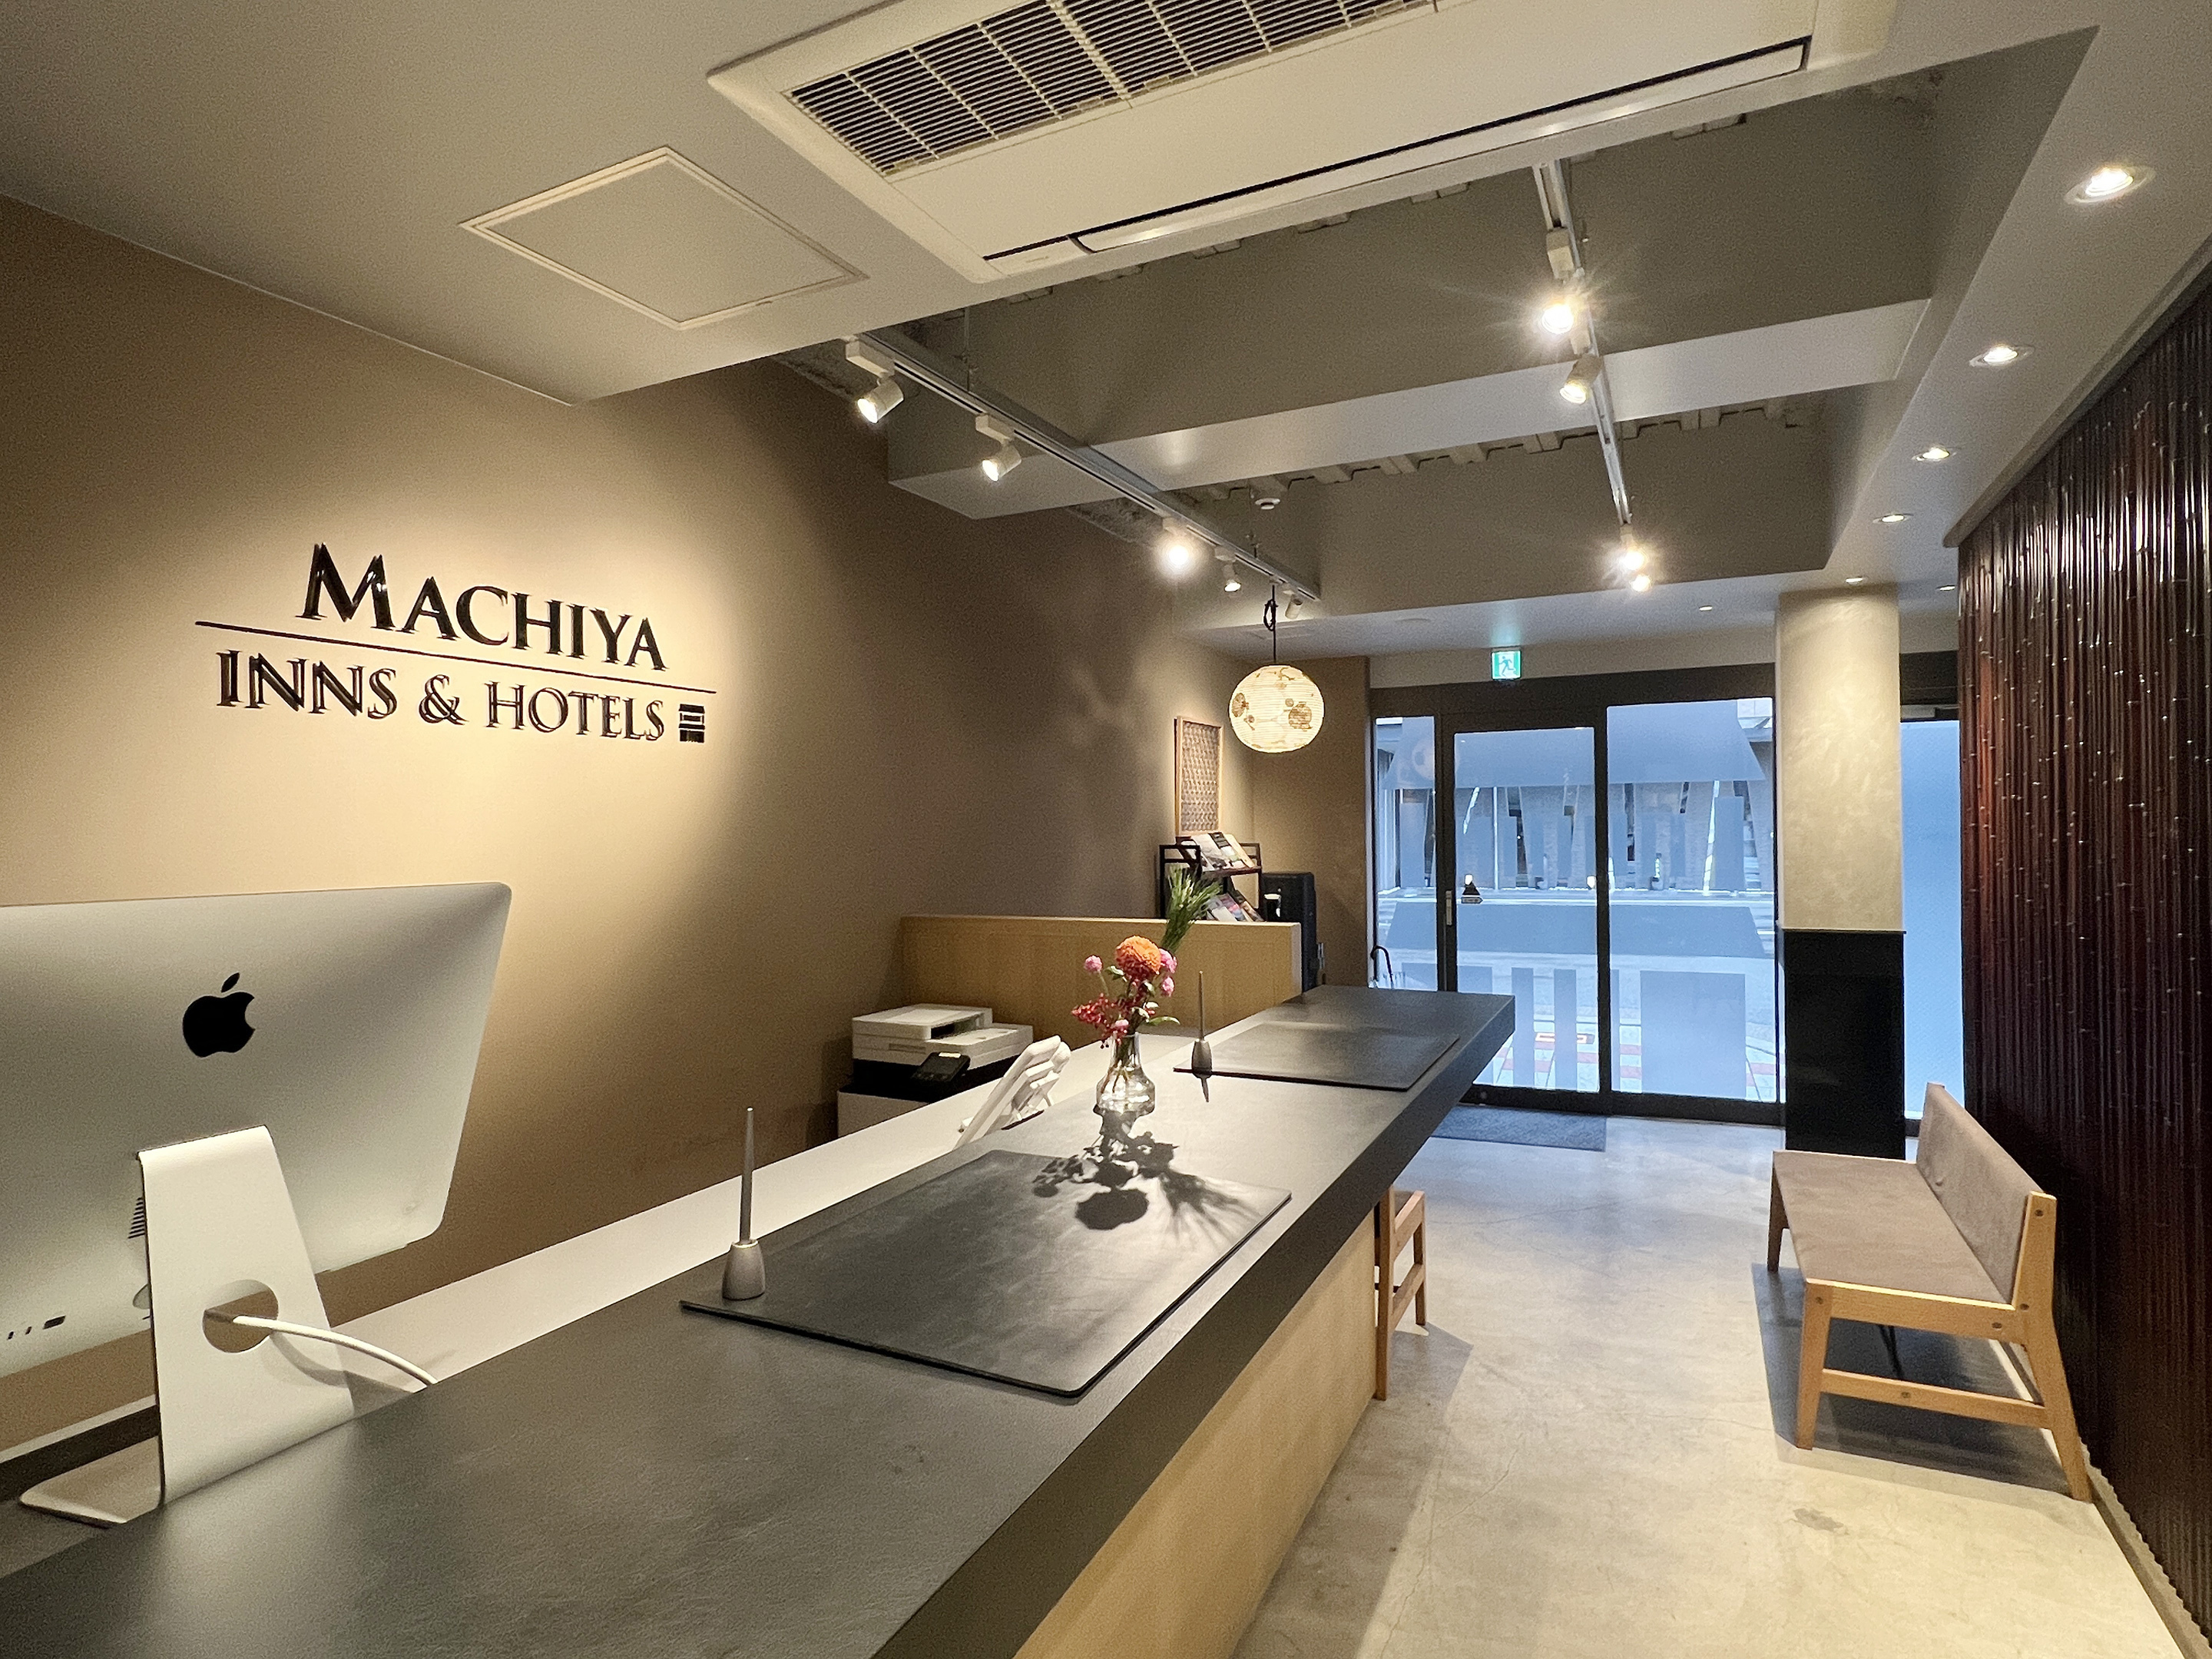 Machiya Inns & Hotels Check in Counter